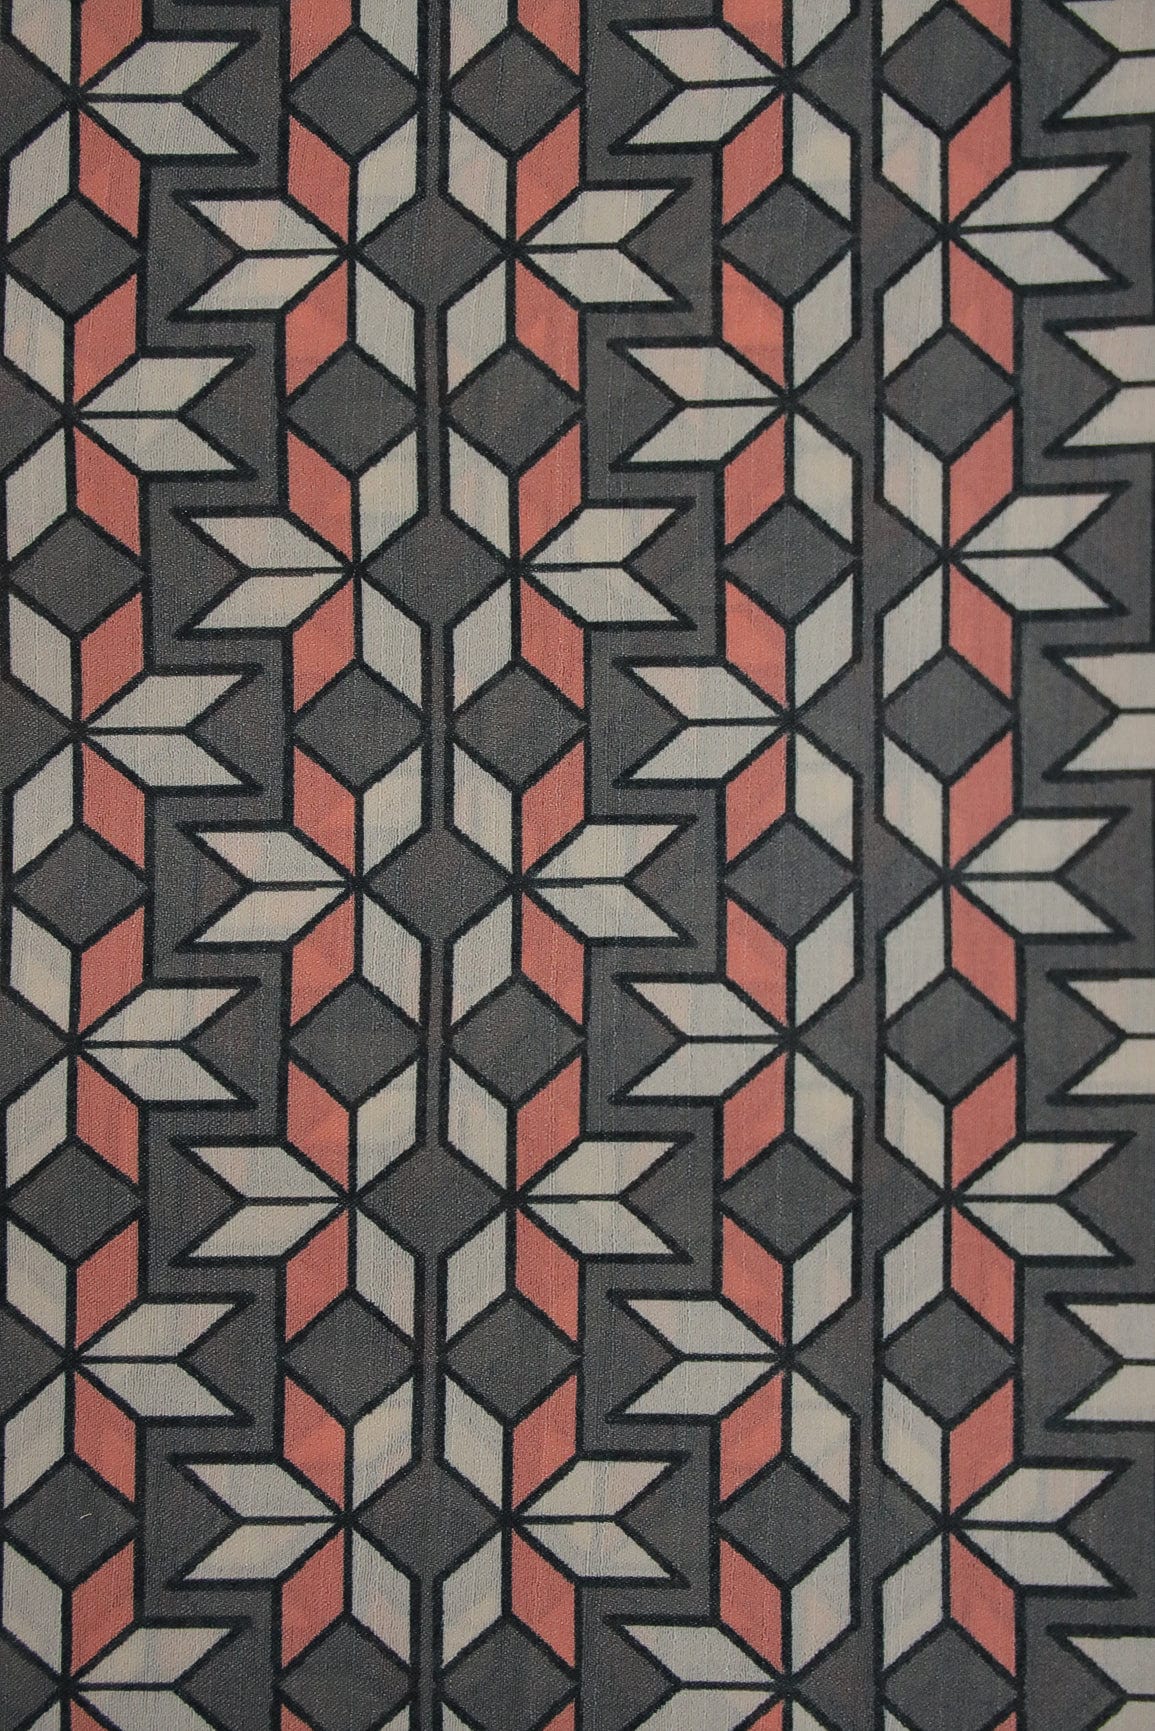 doeraa Prints Pink and Grey Floral Geometric Digital Print on Tussar Satin Fabric